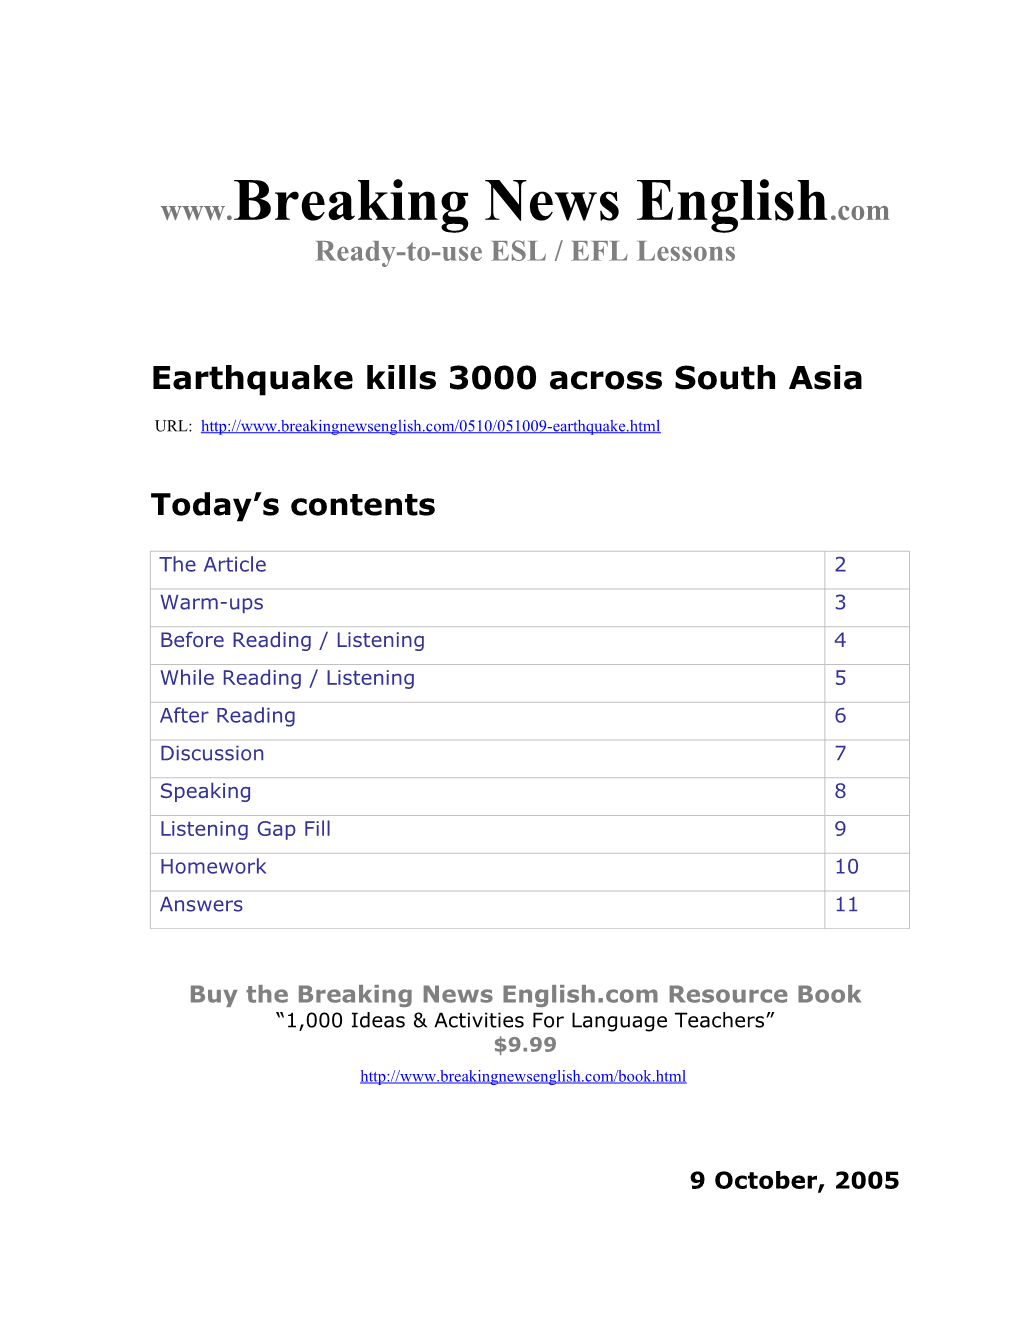 Earthquake Kills 3000 Across South Asia